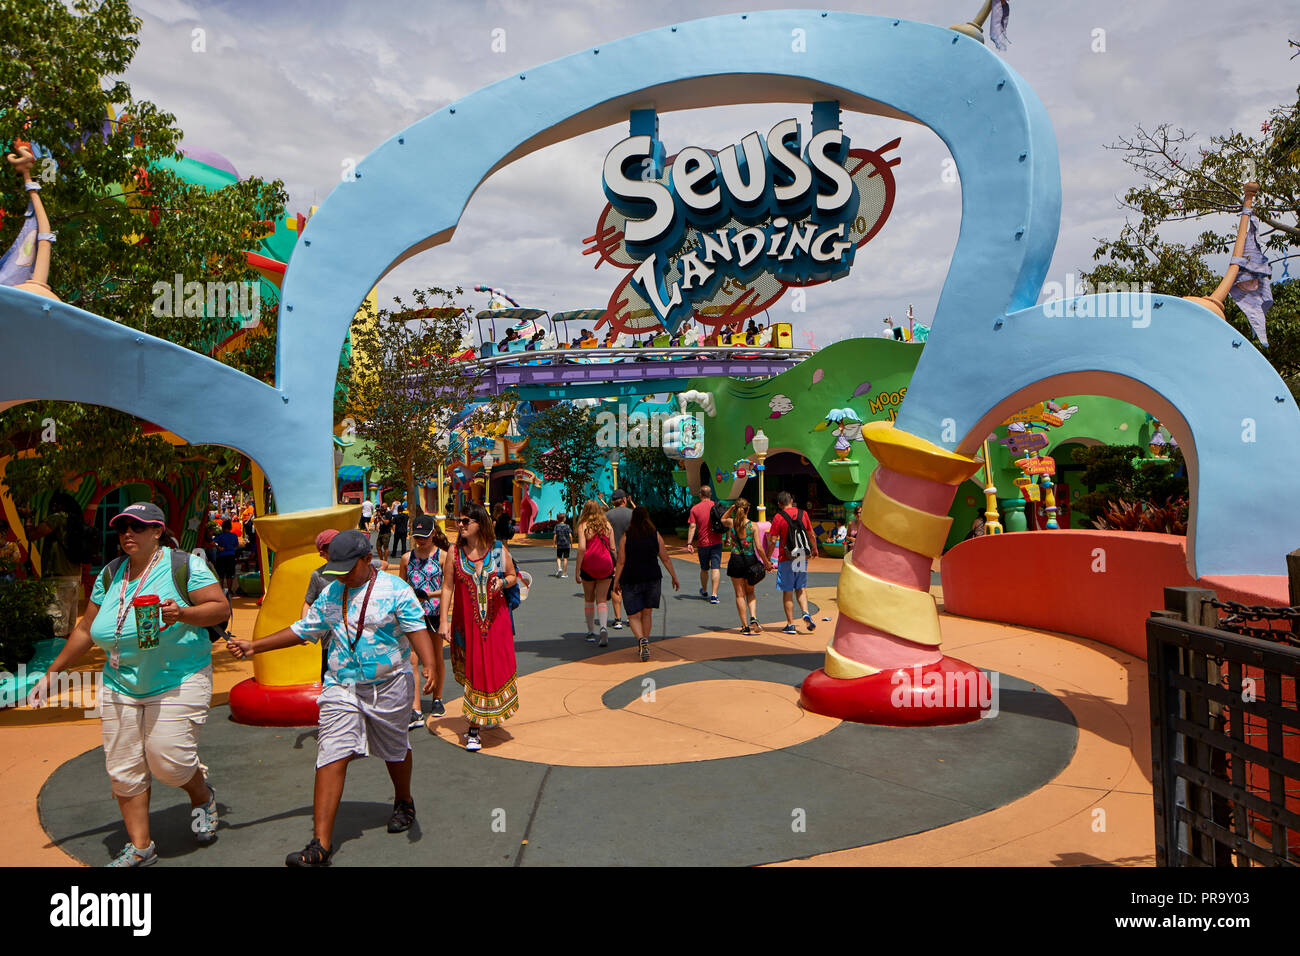 Seuss Landing Dr Seuss land in Universal studios orlando Stock Photo